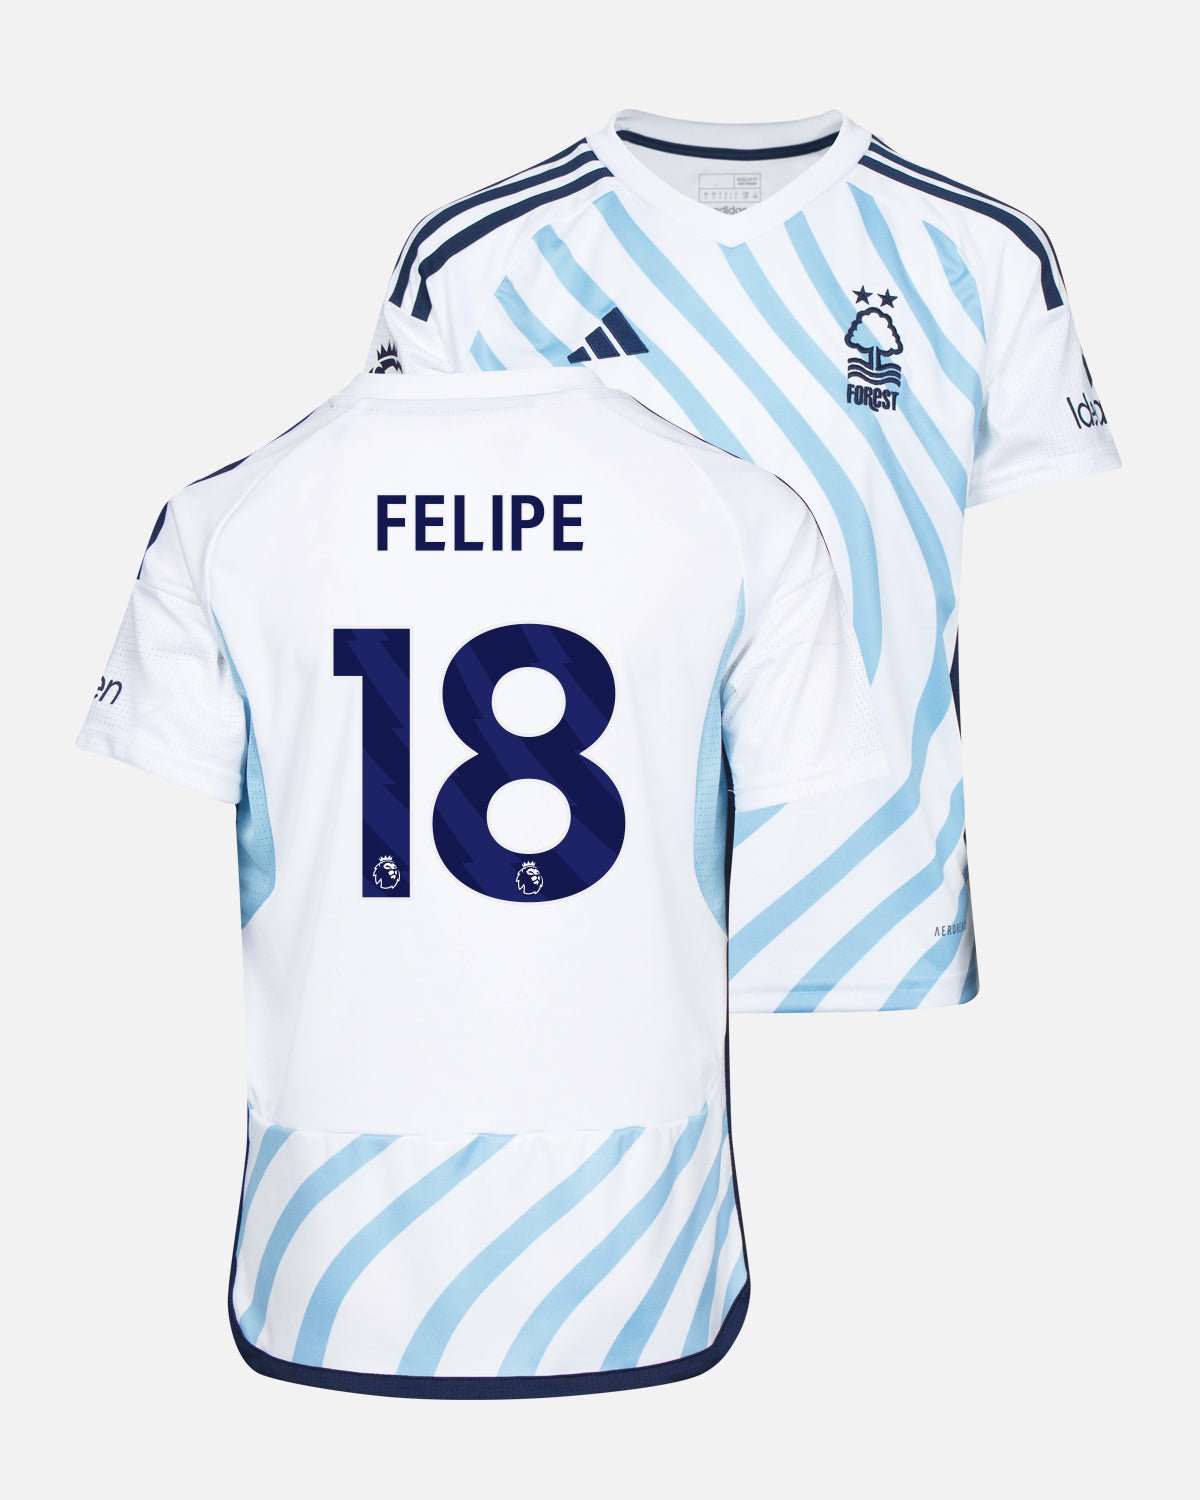 NFFC Junior Away Shirt 23-24 - Felipe 18 - Nottingham Forest FC